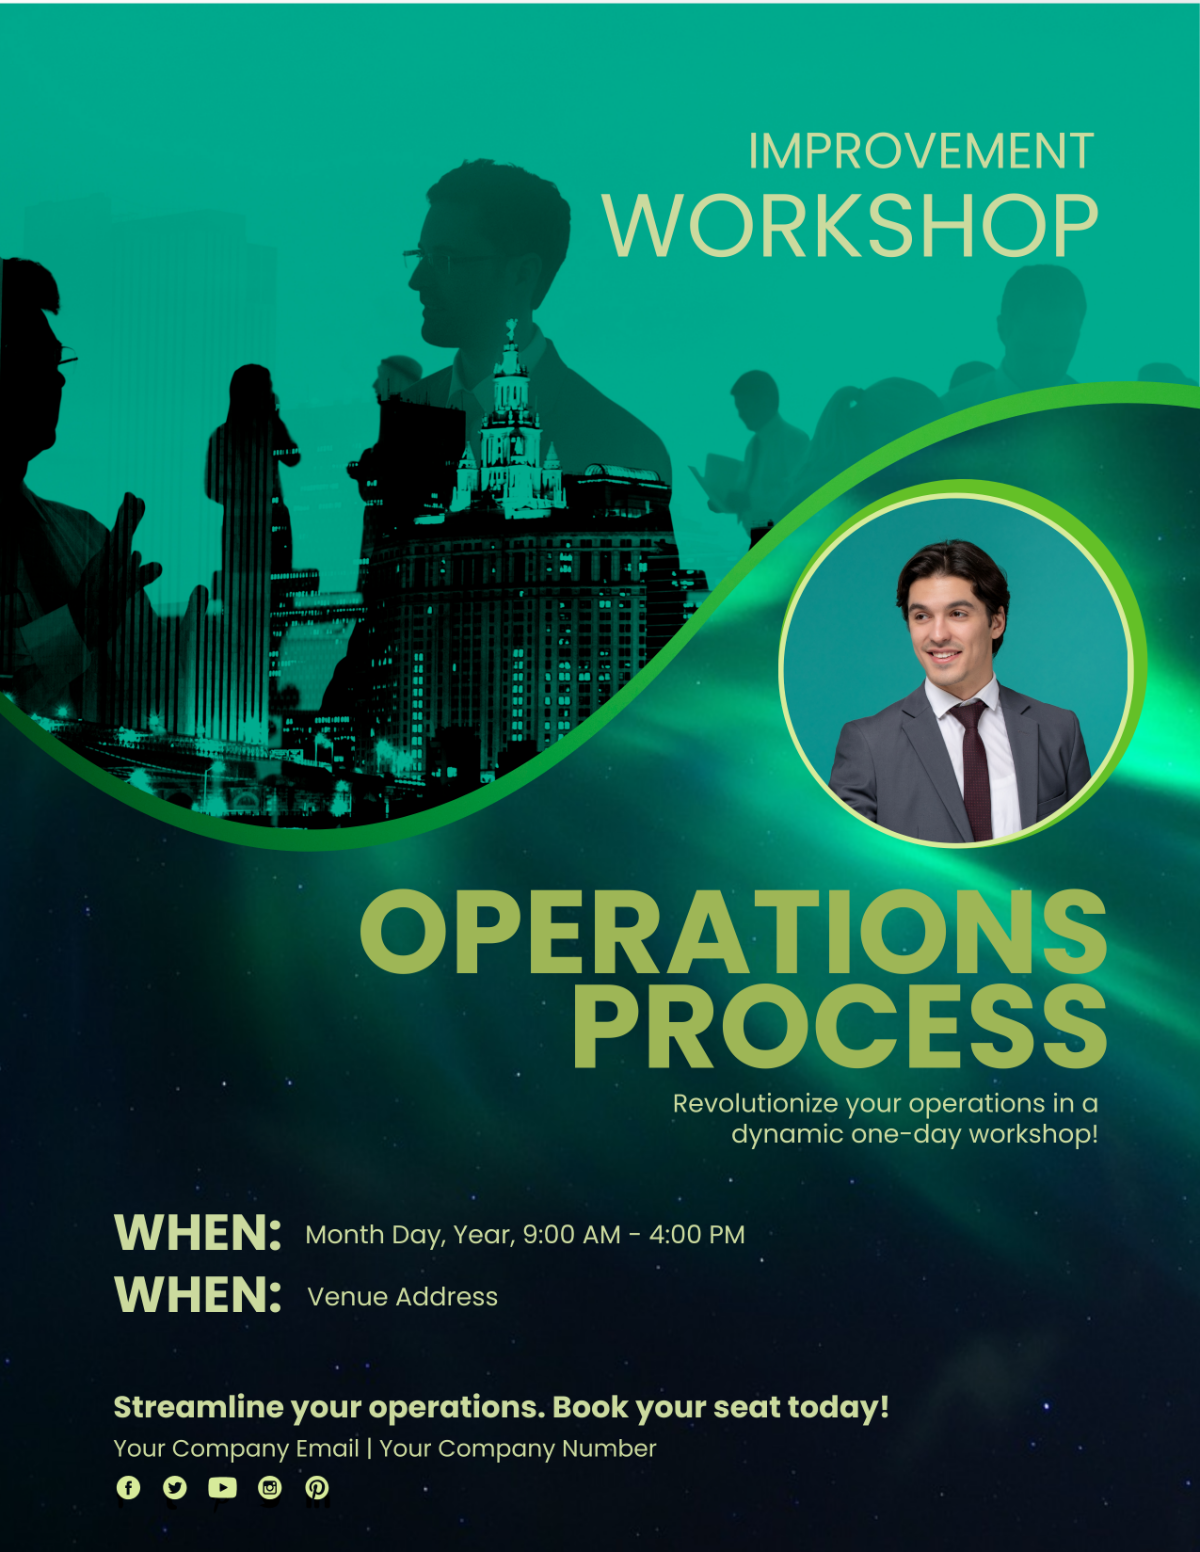 Operations Process Improvement Workshop Flyer